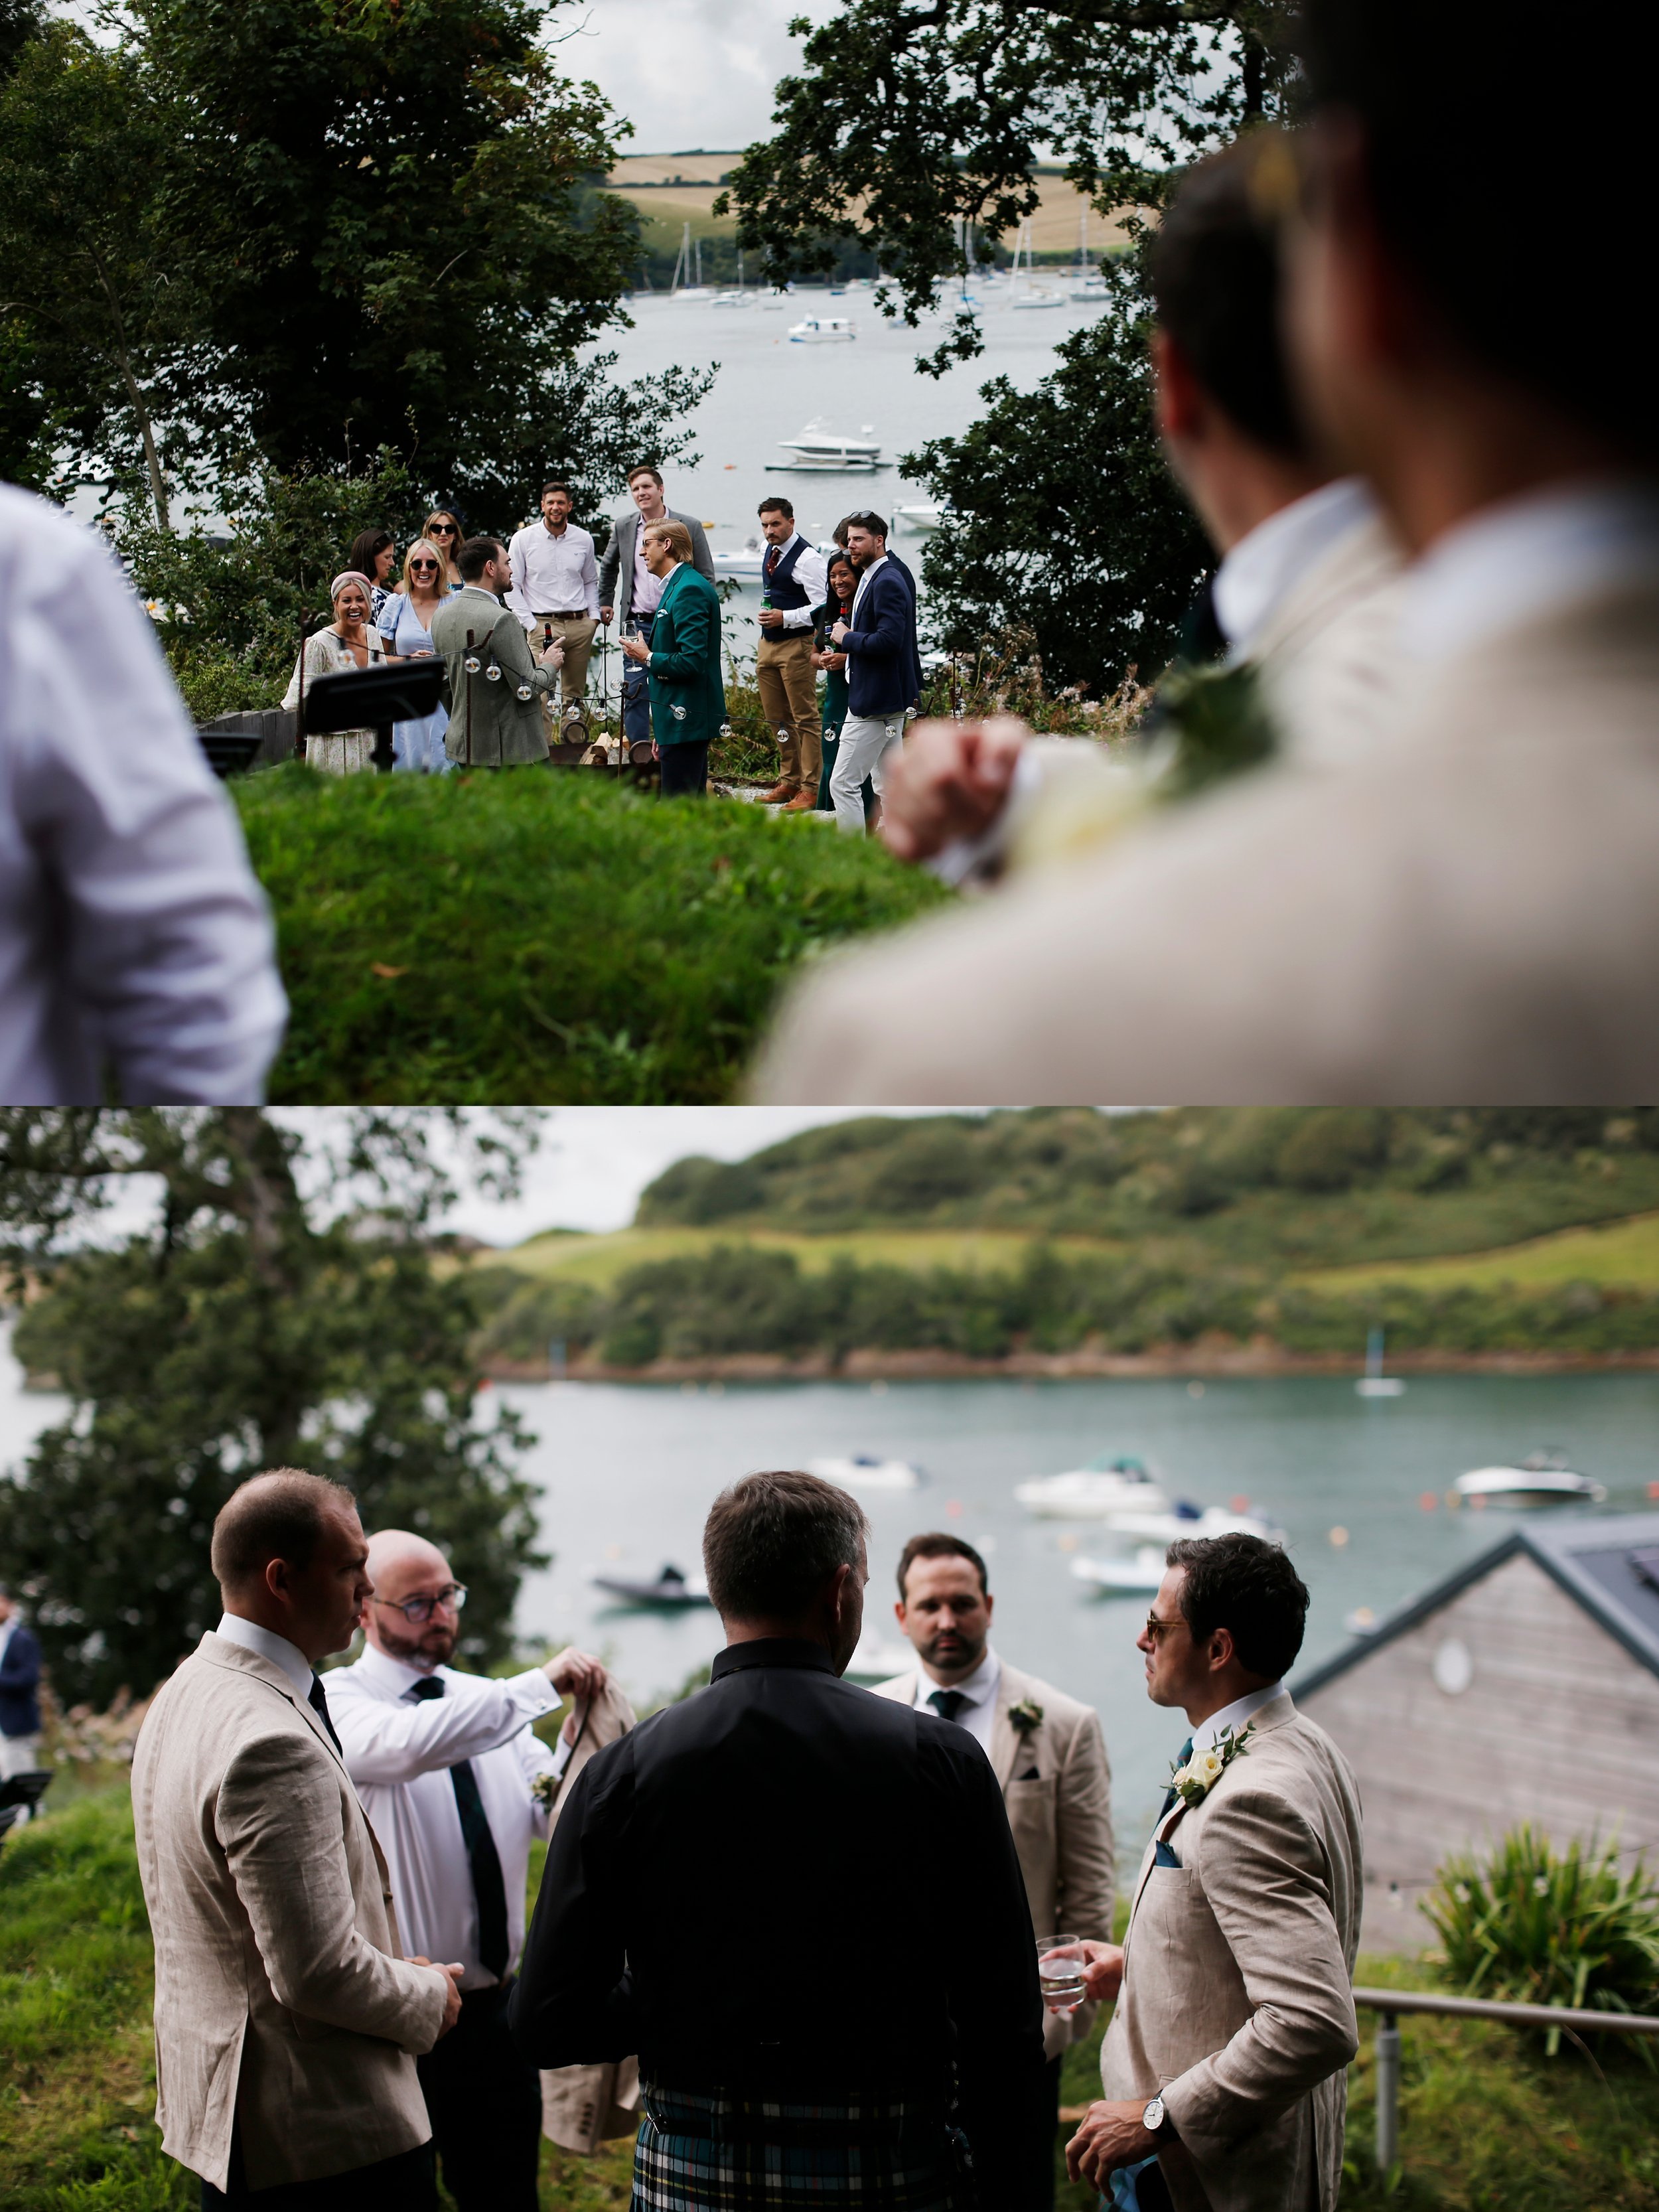 PortwaterHouse+Wedding+Photography+_+Brett+Harkness-13.jpg